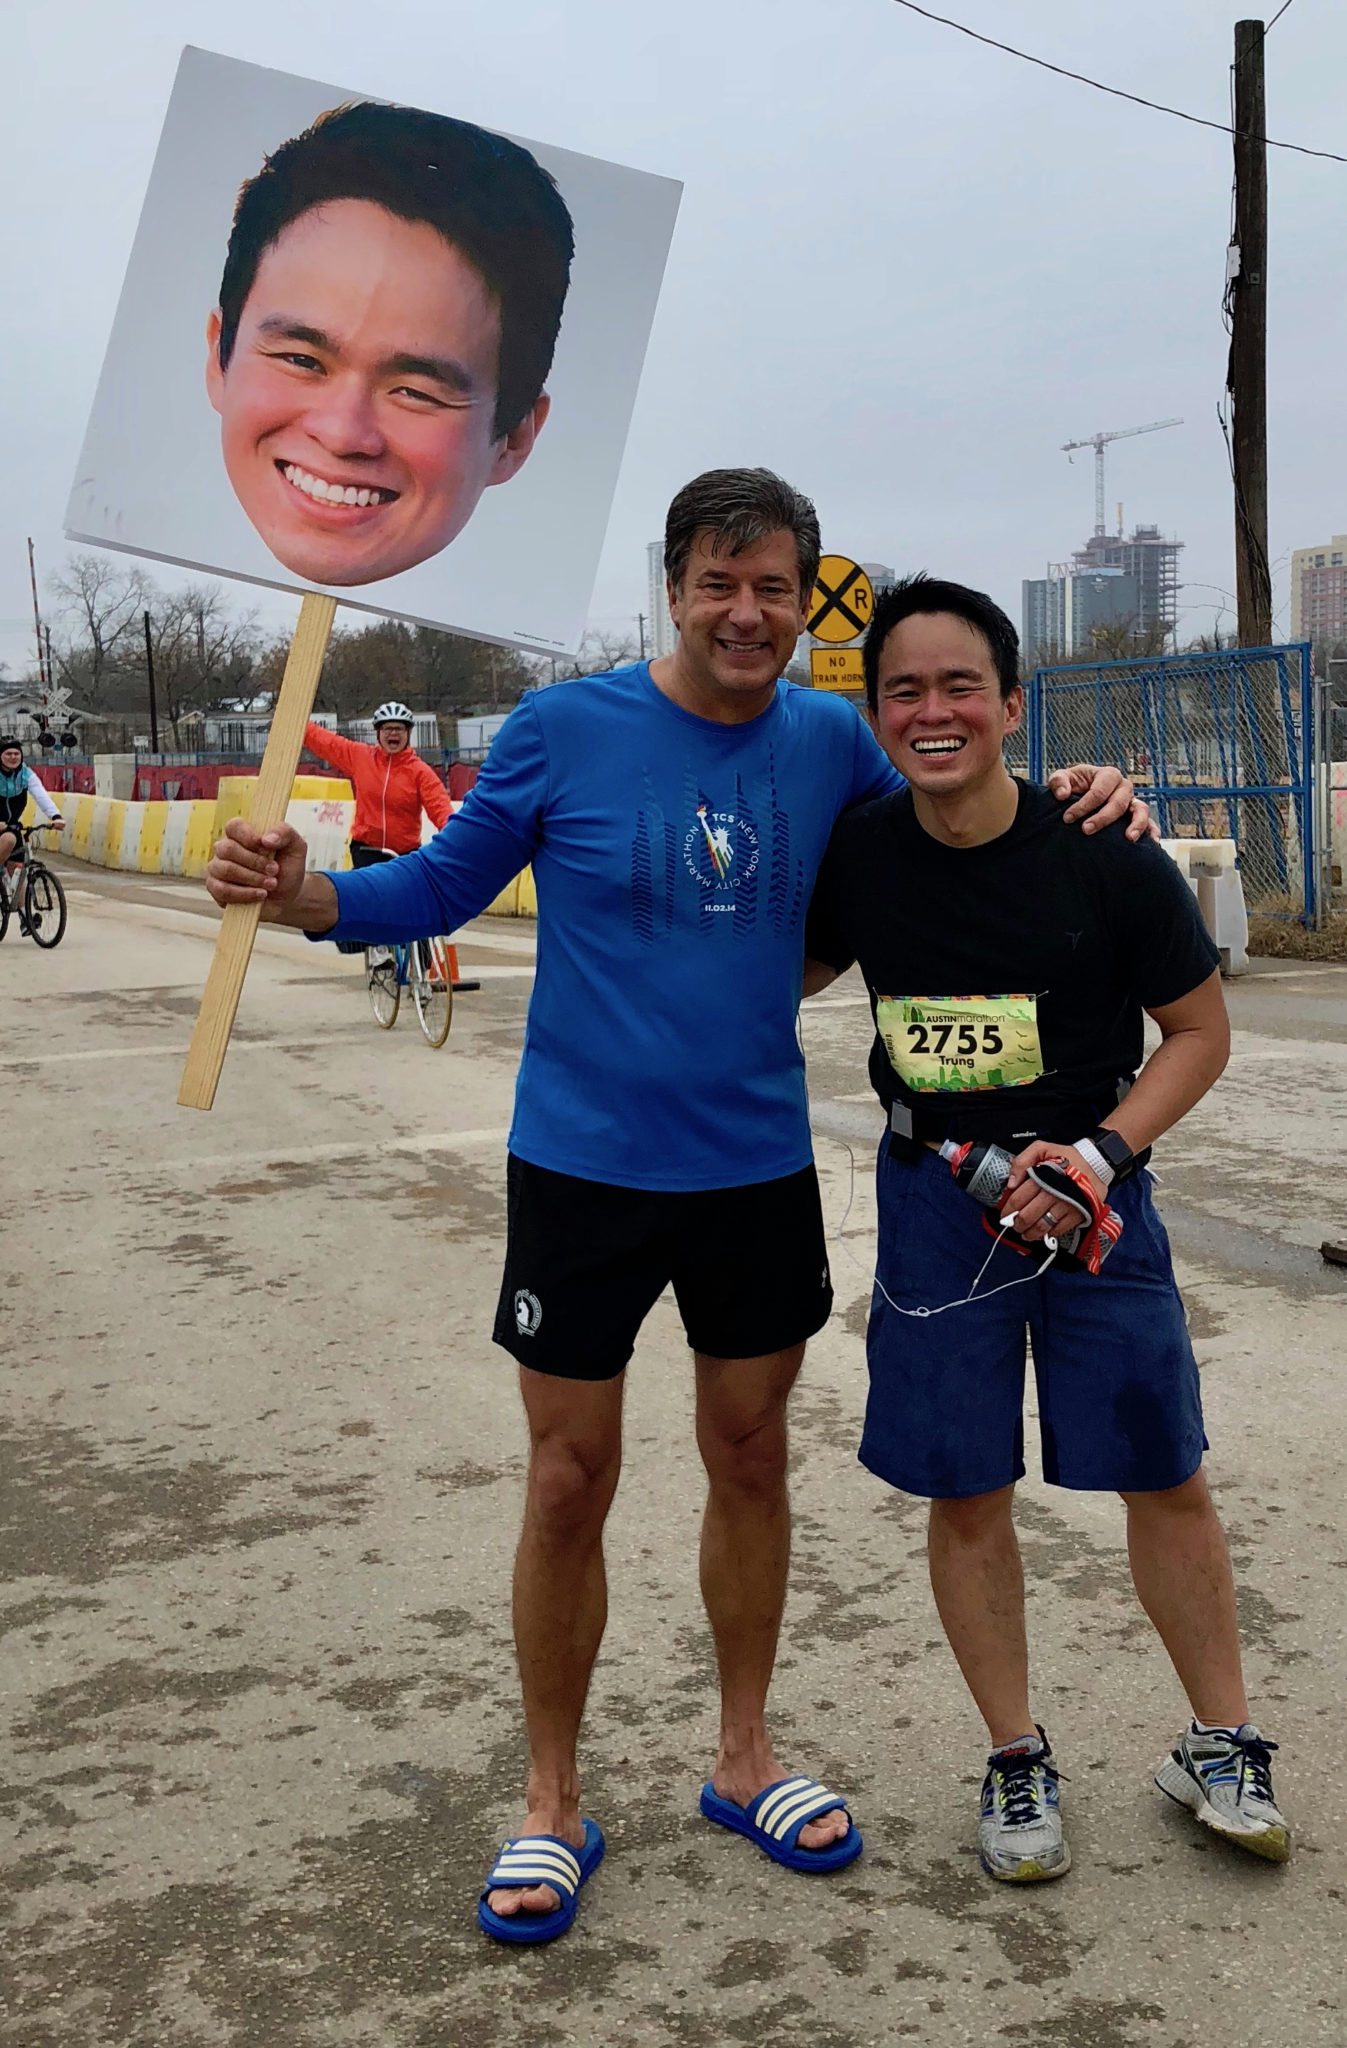 Ryan and Trung at mile 25